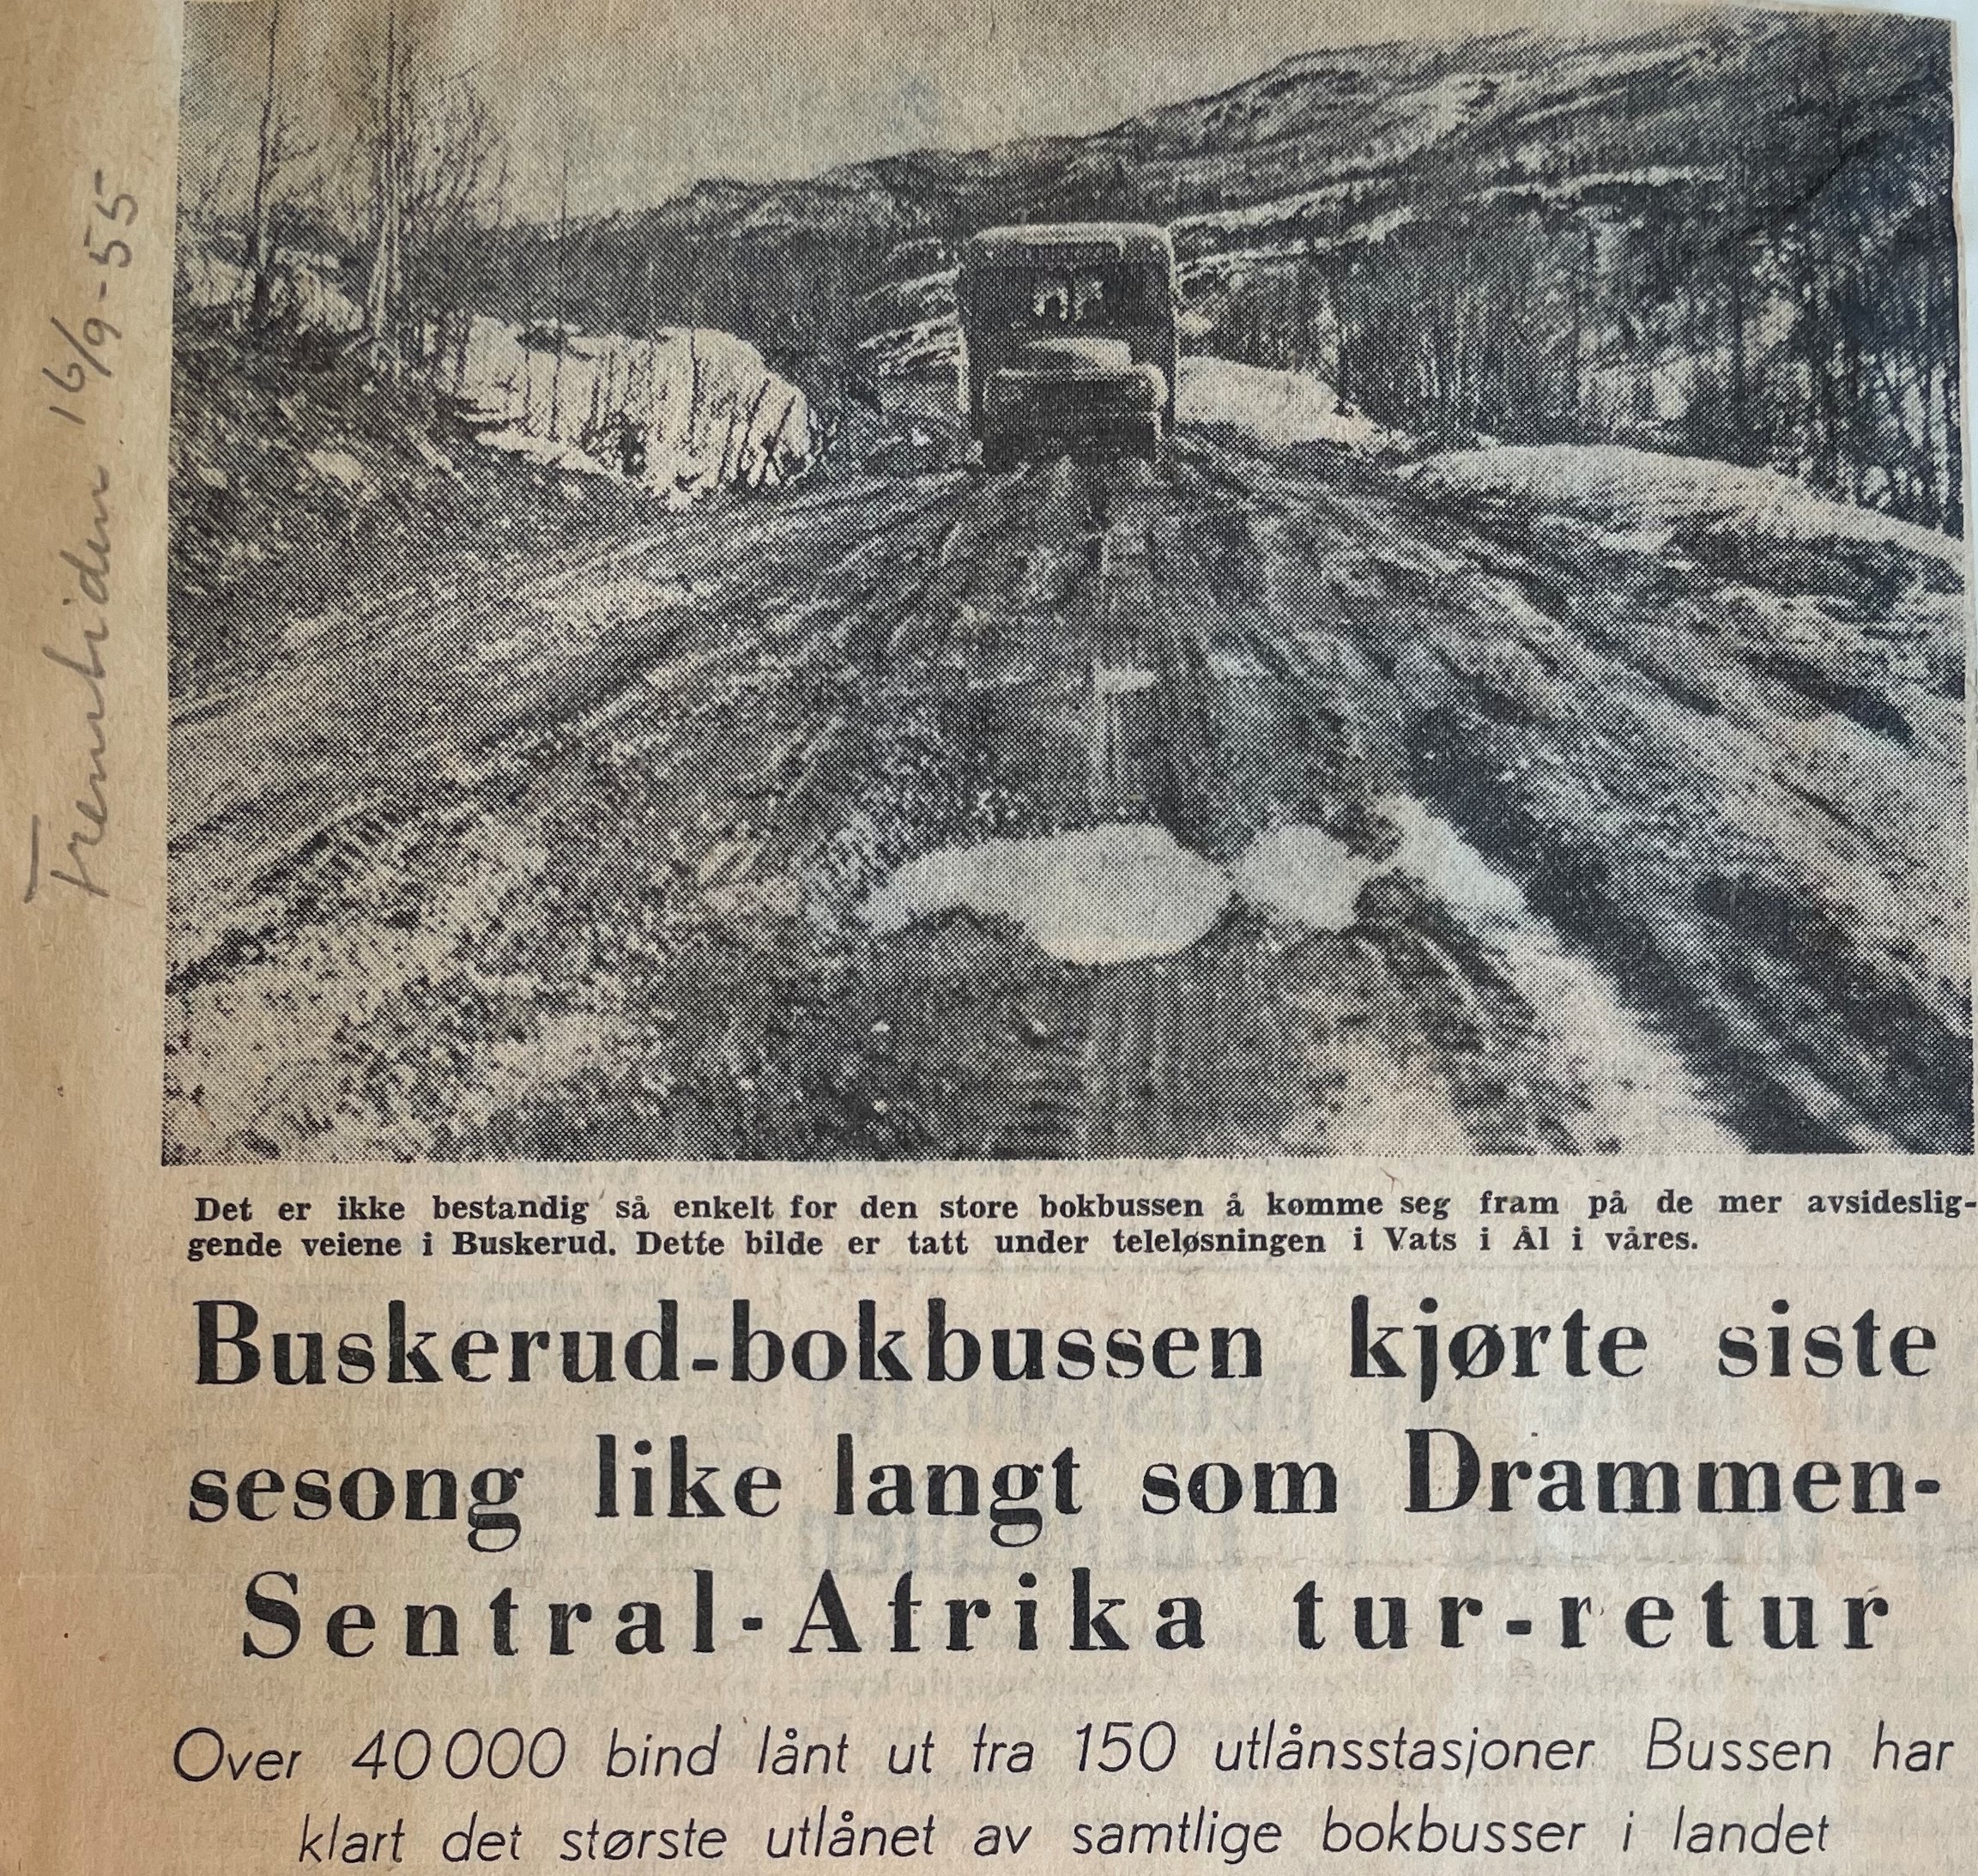 Avisutklipp om at bokbussen i Buskerud har kjørt langt. Bilde av bokbussen på dårlige veier 1955.